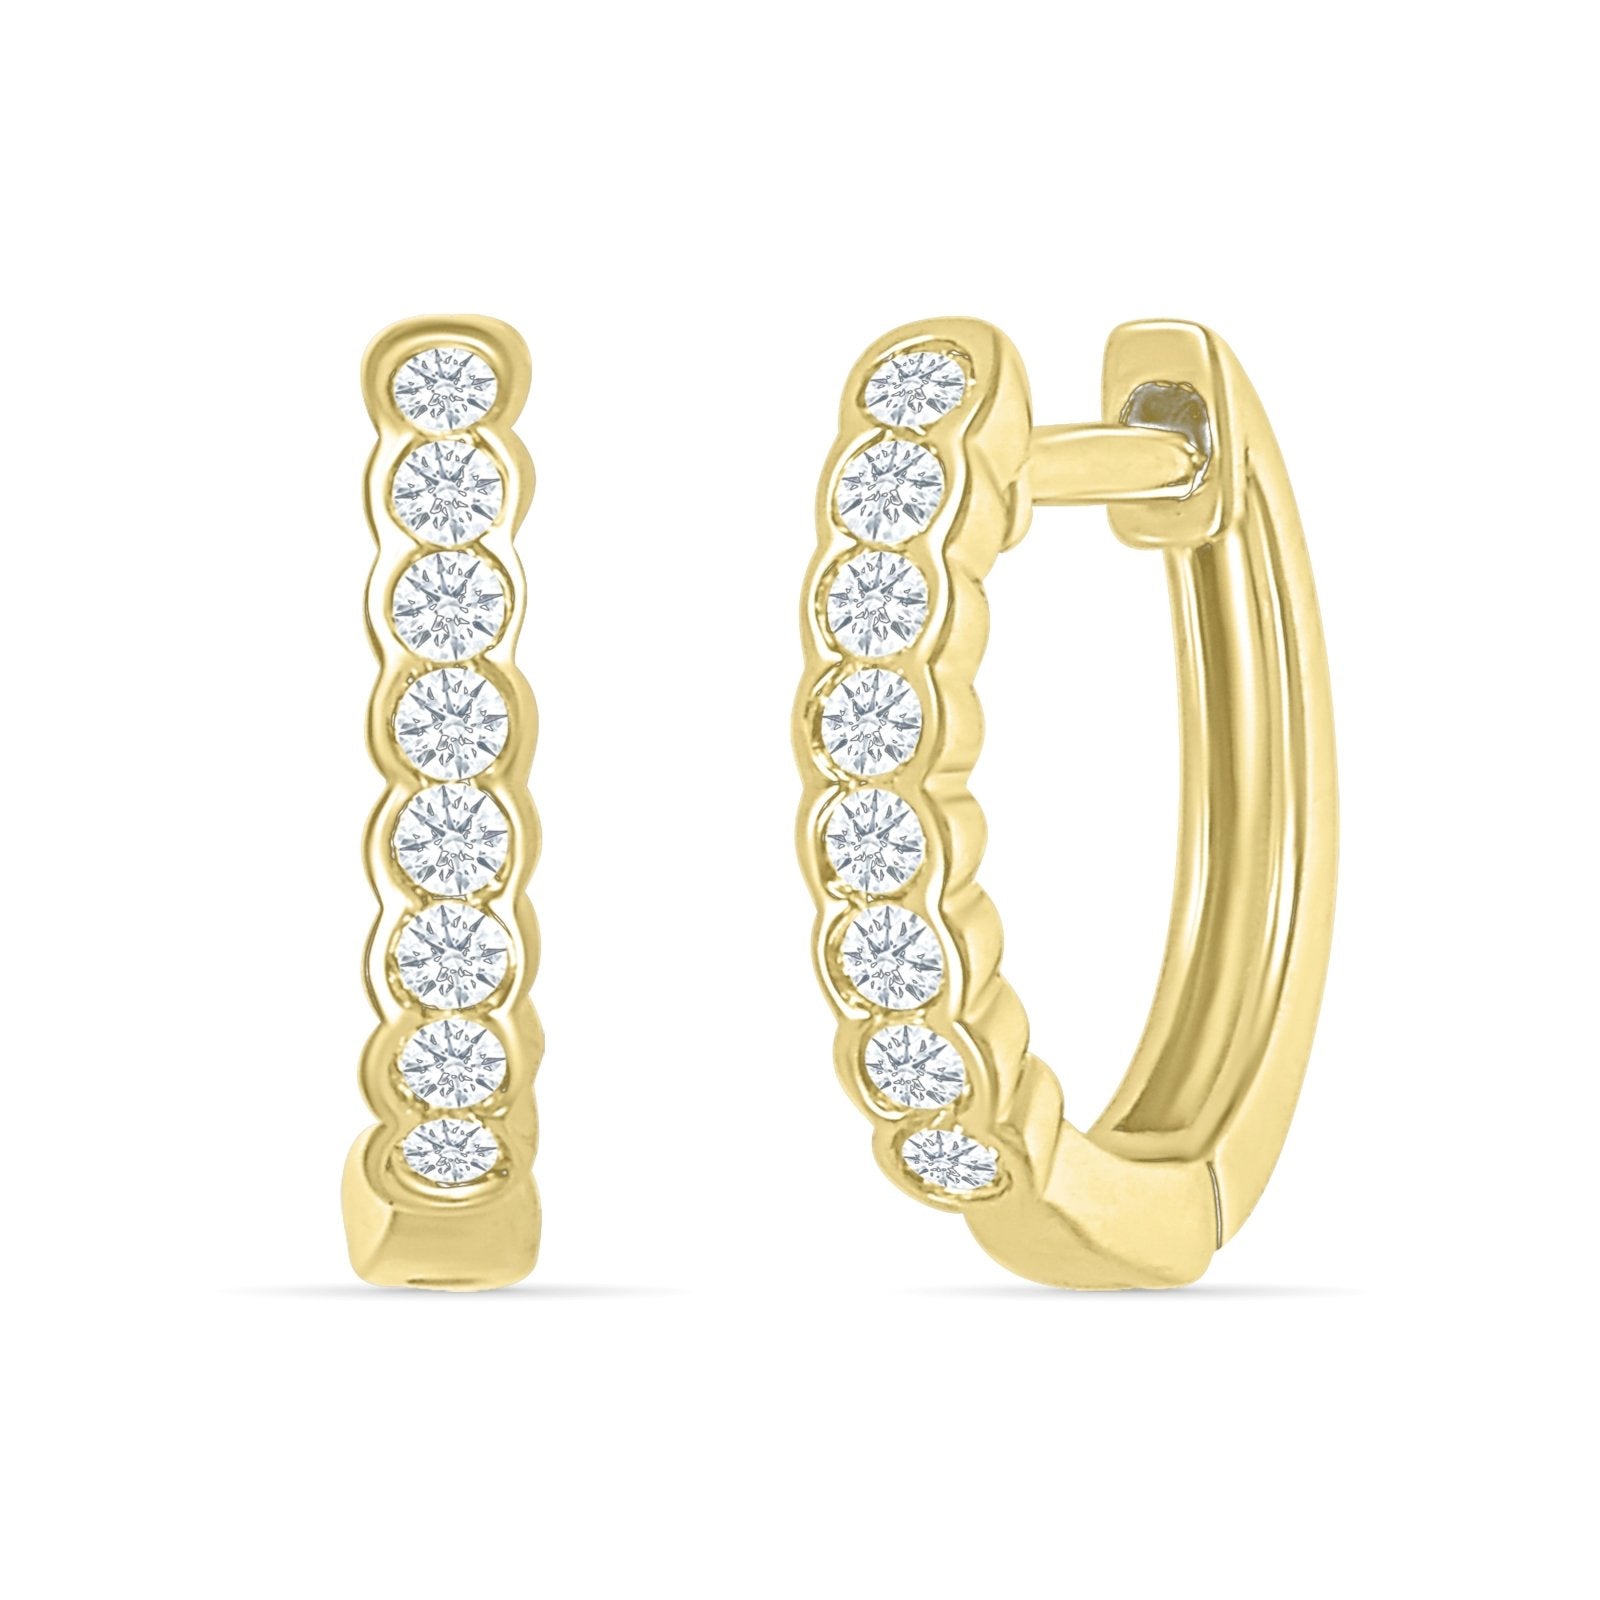 Bezel Set Diamond Hoop Earrings Earrings Estella Collection 32680 Diamond Made to Order Yellow Gold #tag4# #tag5# #tag6# #tag7# #tag8# #tag9# #tag10#